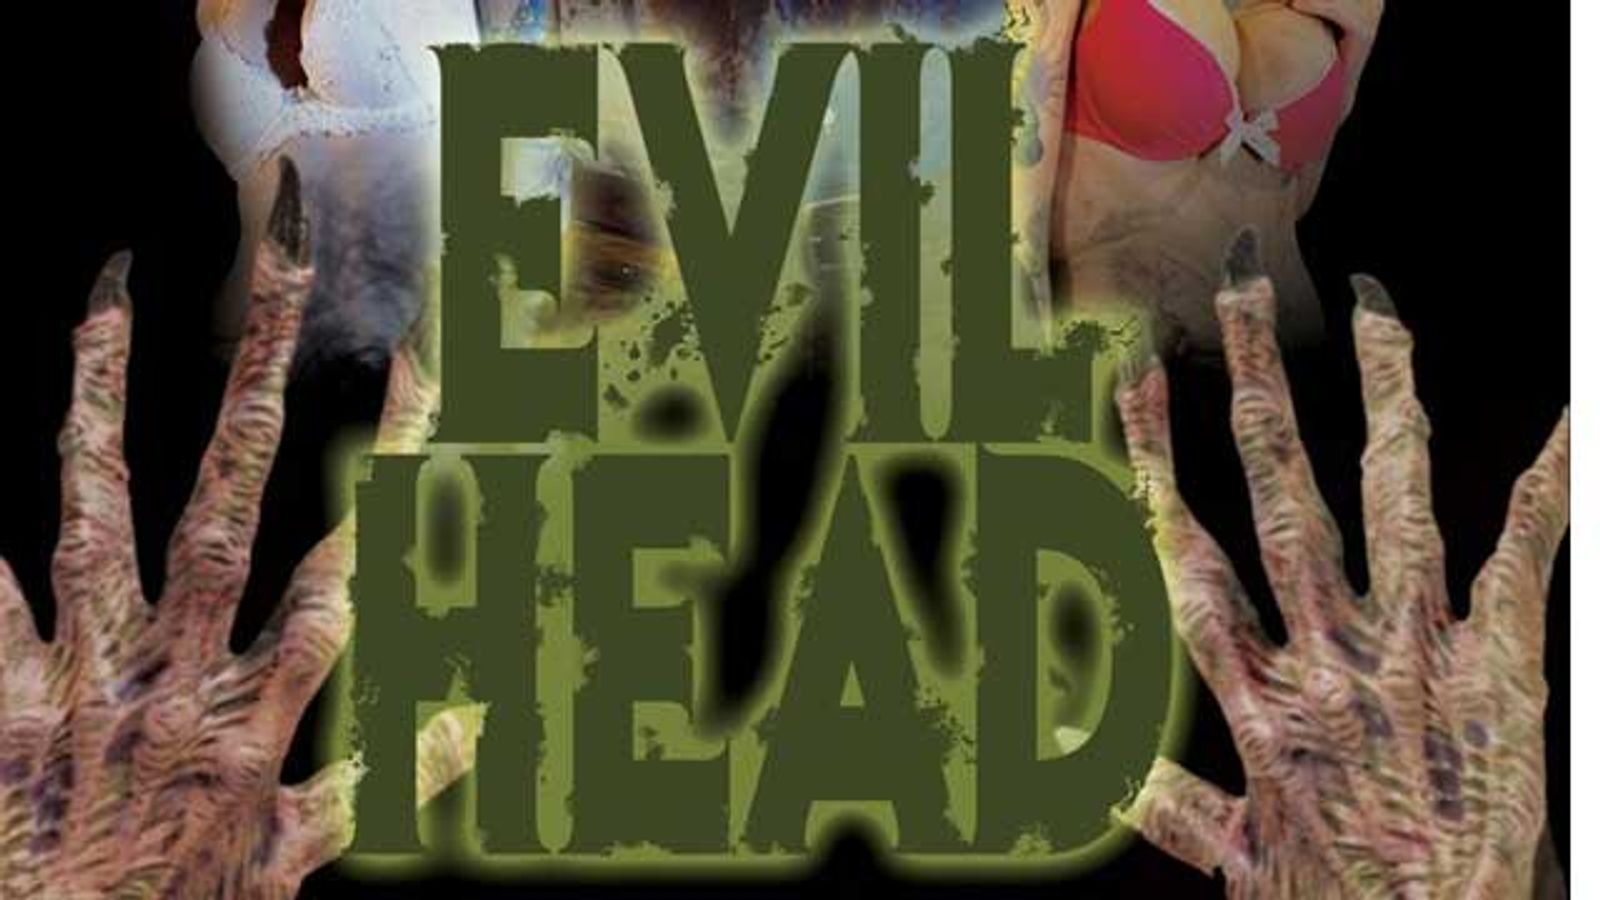 Joanna Angel, Doug Sakmann Street 'Evil Head'